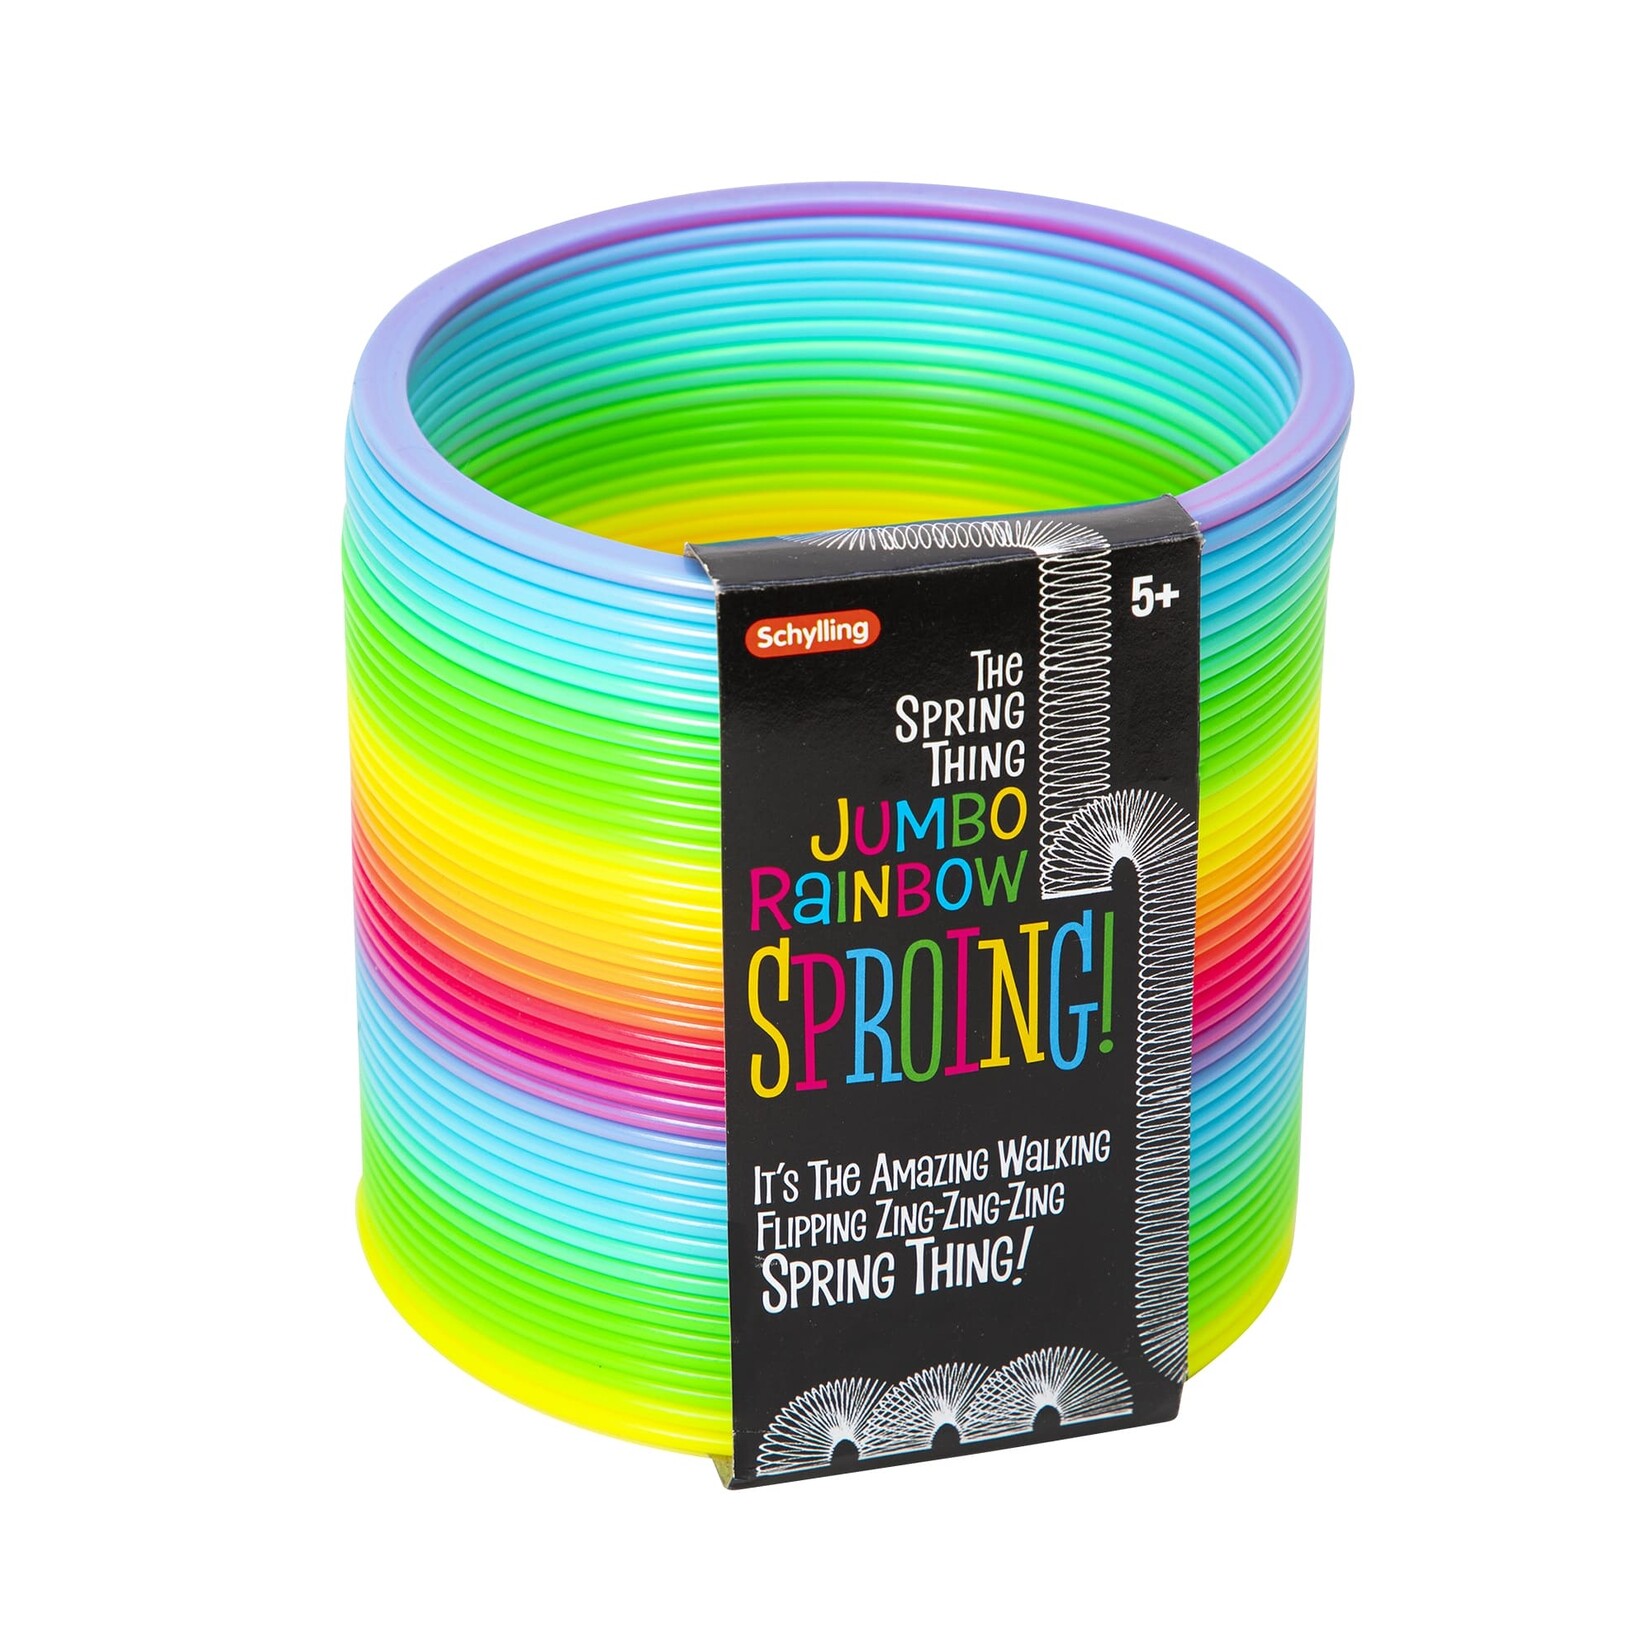 Ridley's Jumbo Rainbow Spring